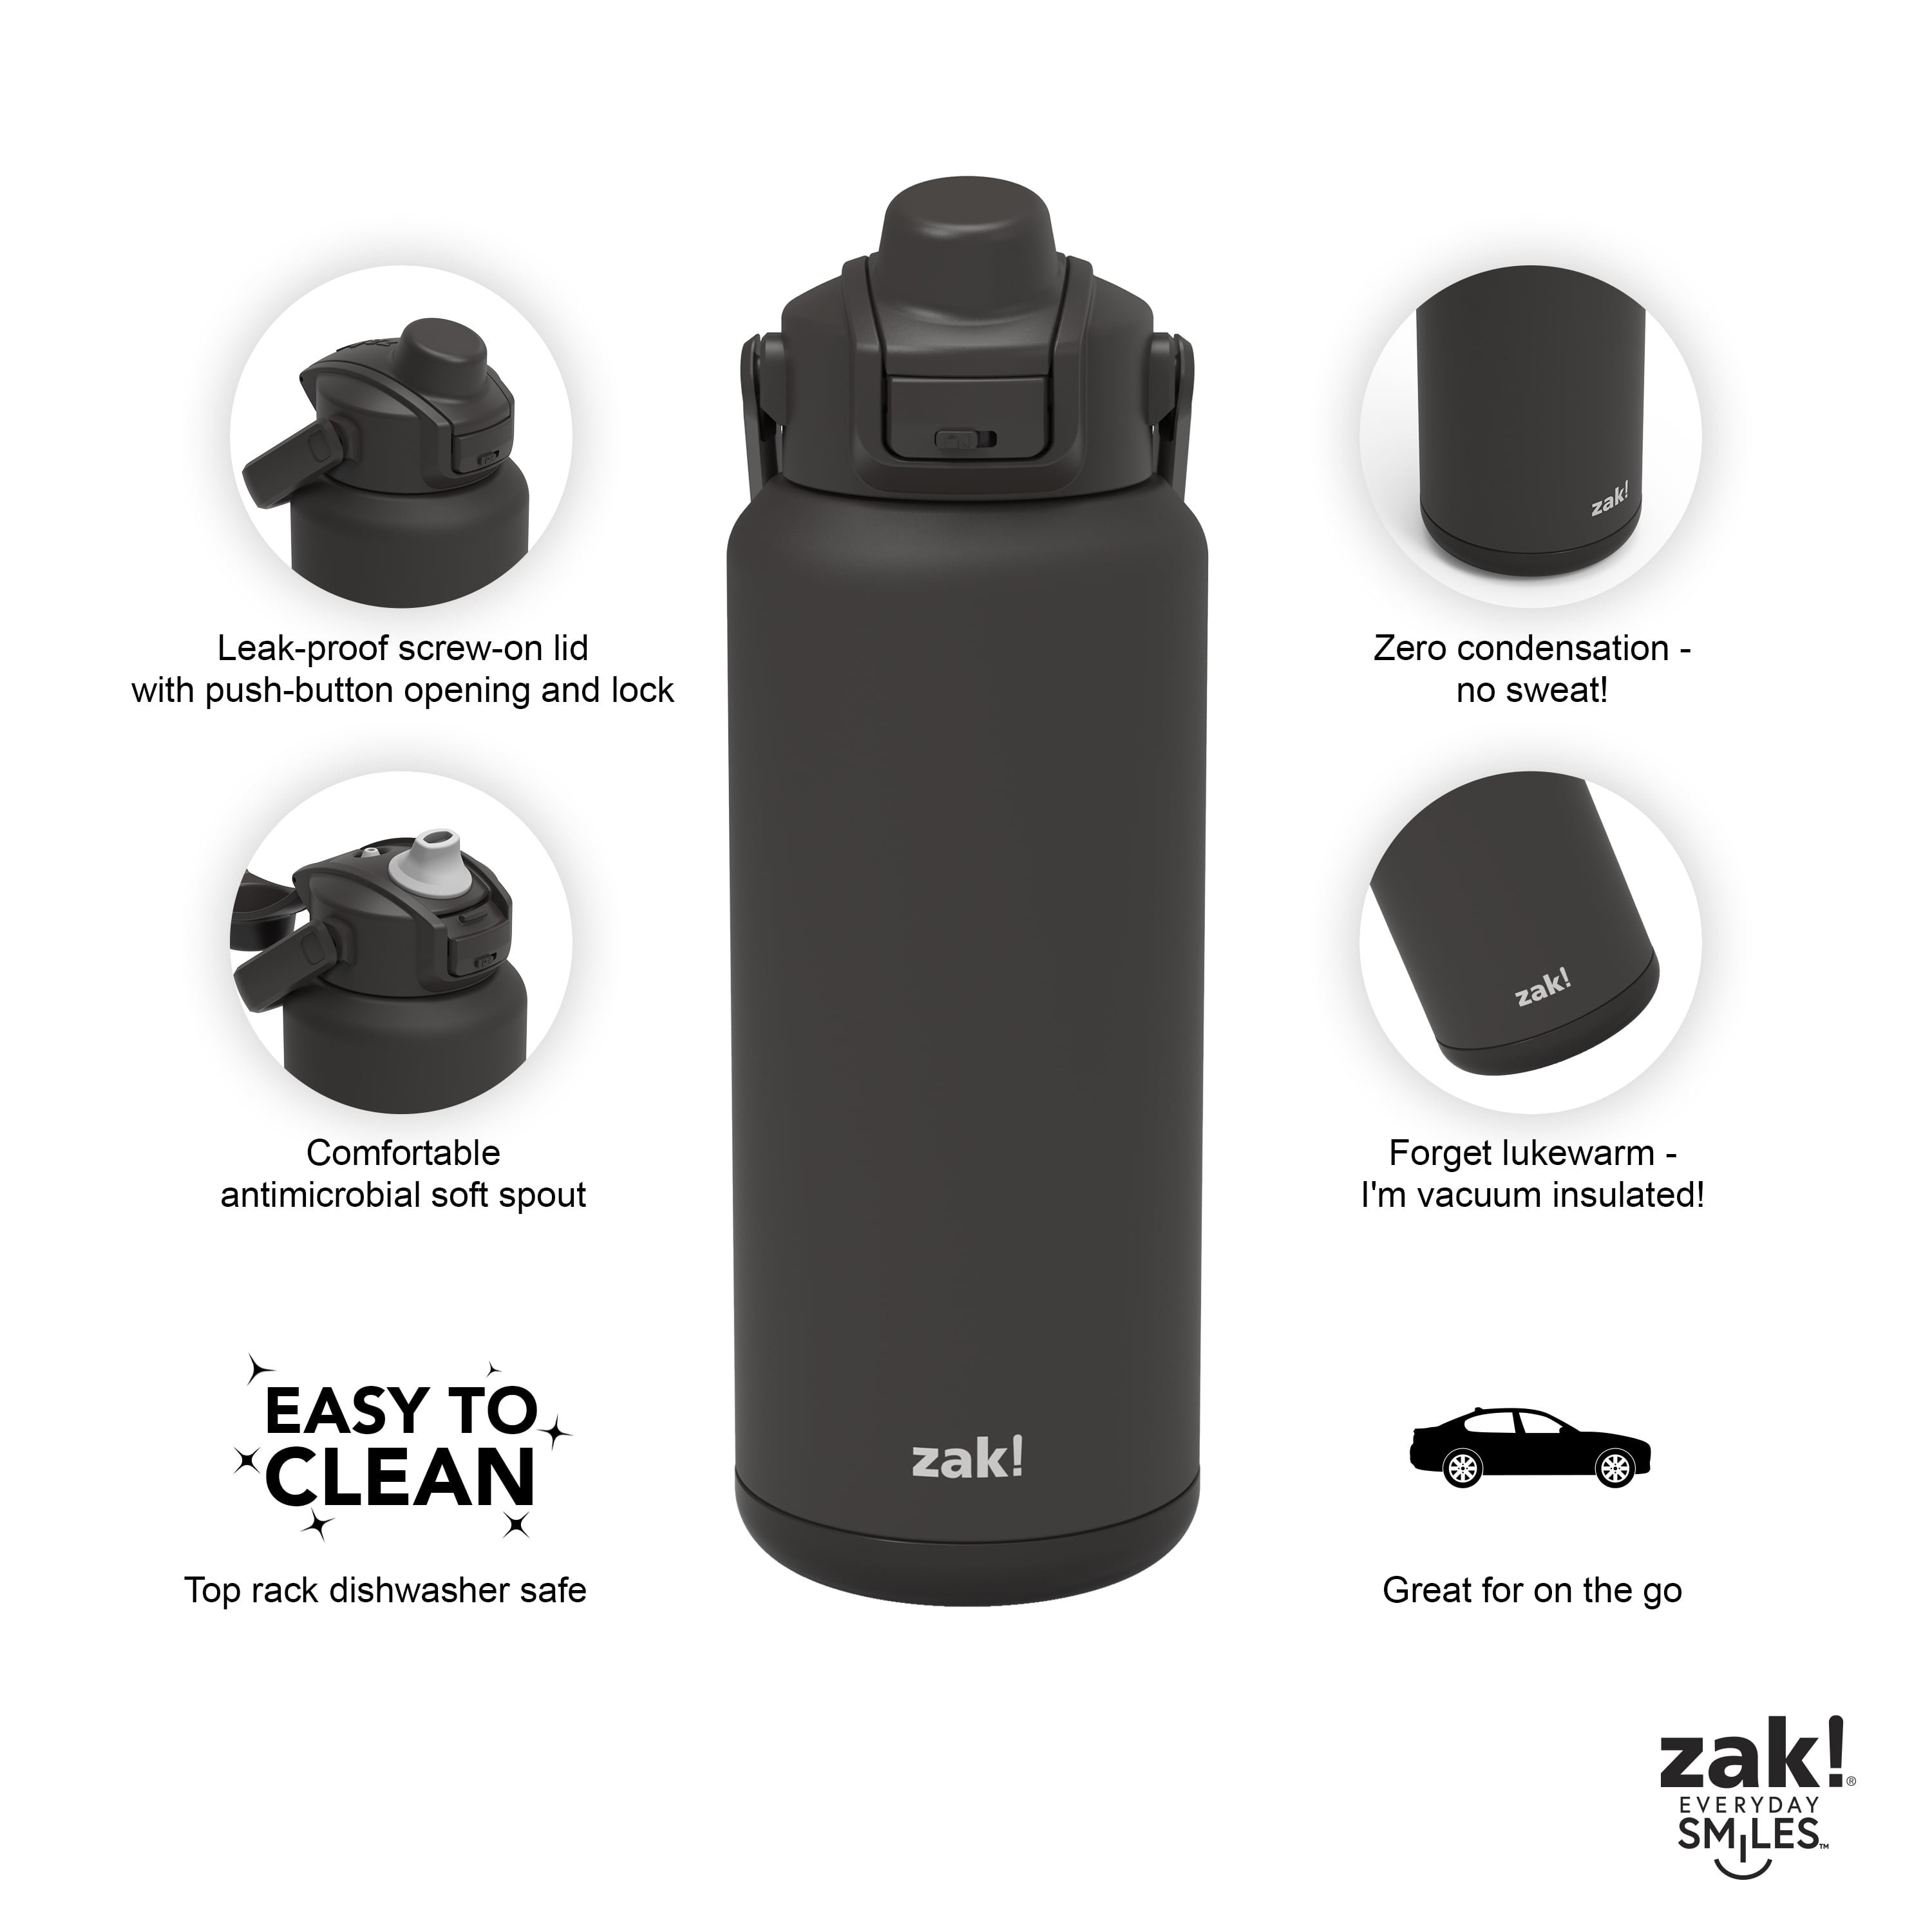 Zak! Designs Jungle Joy Double Walled Stainless Steel Water Bottle, 1 ct -  King Soopers